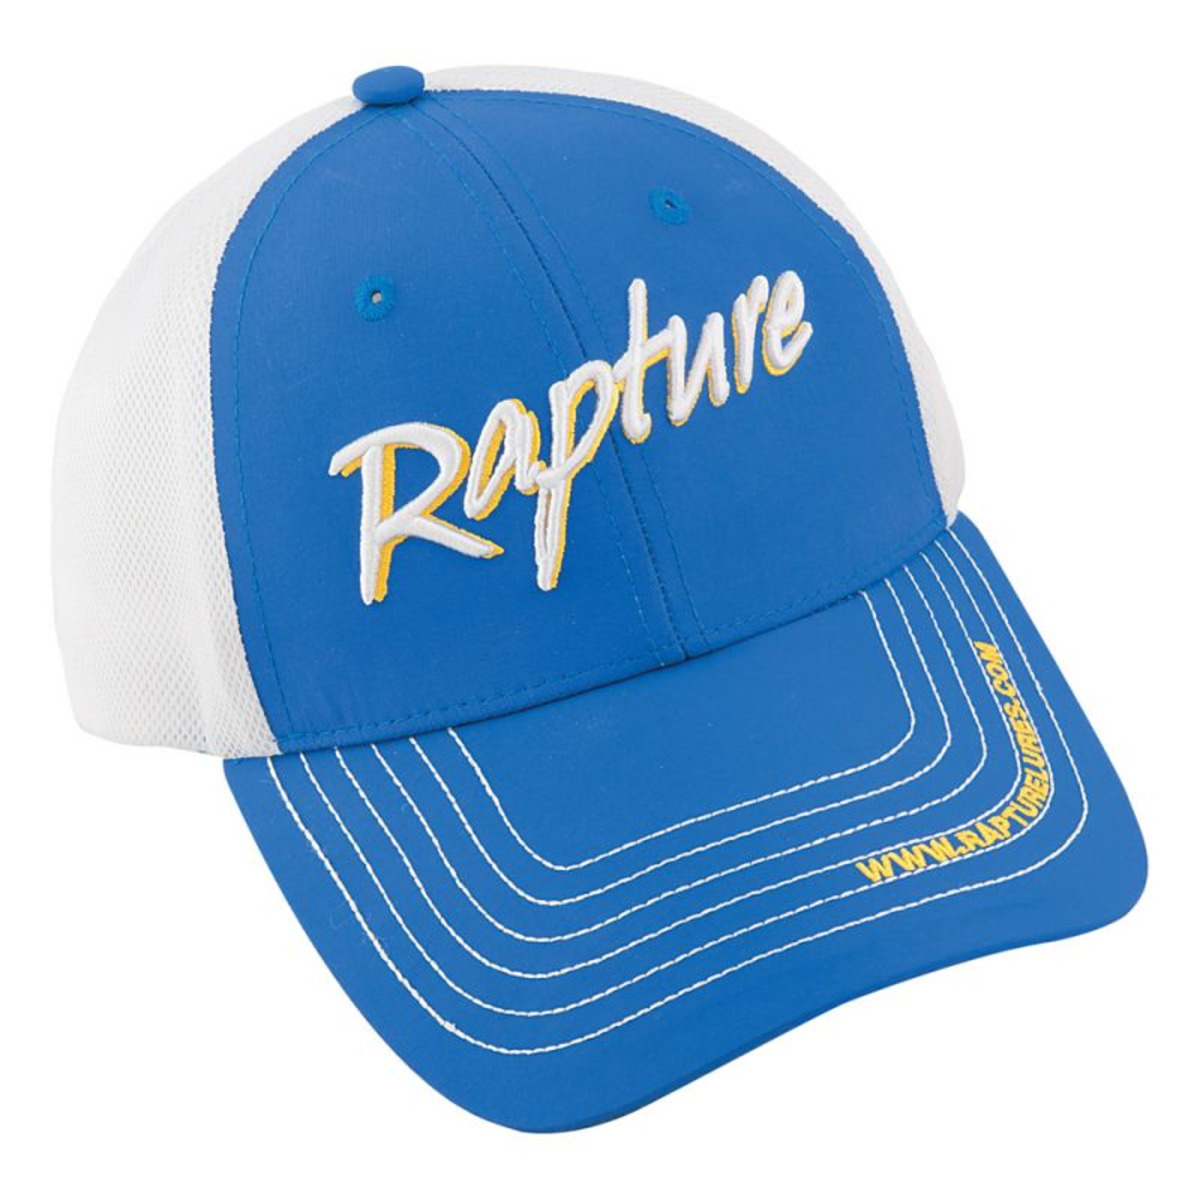 Rapture Pro Team Caps - Sealine Mesh